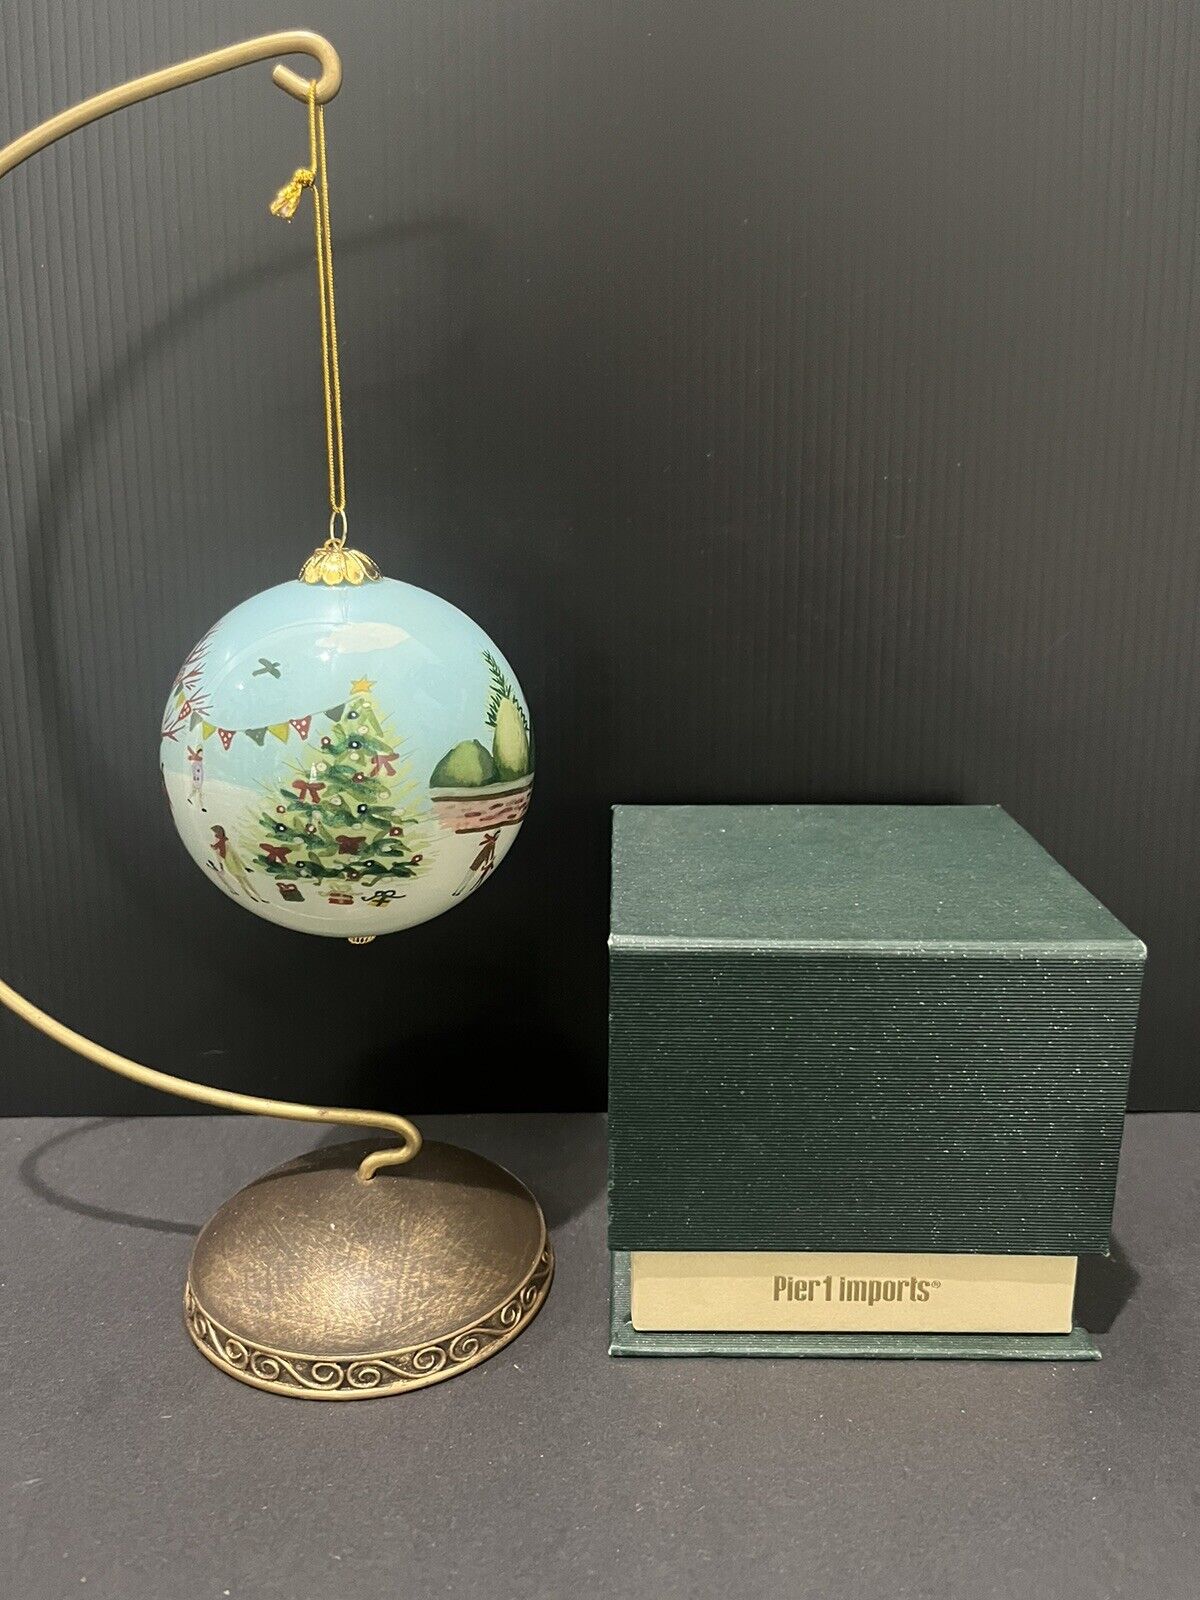 Pier 1 Imports Li Bien 2019 Christmas Art Glass Ornament